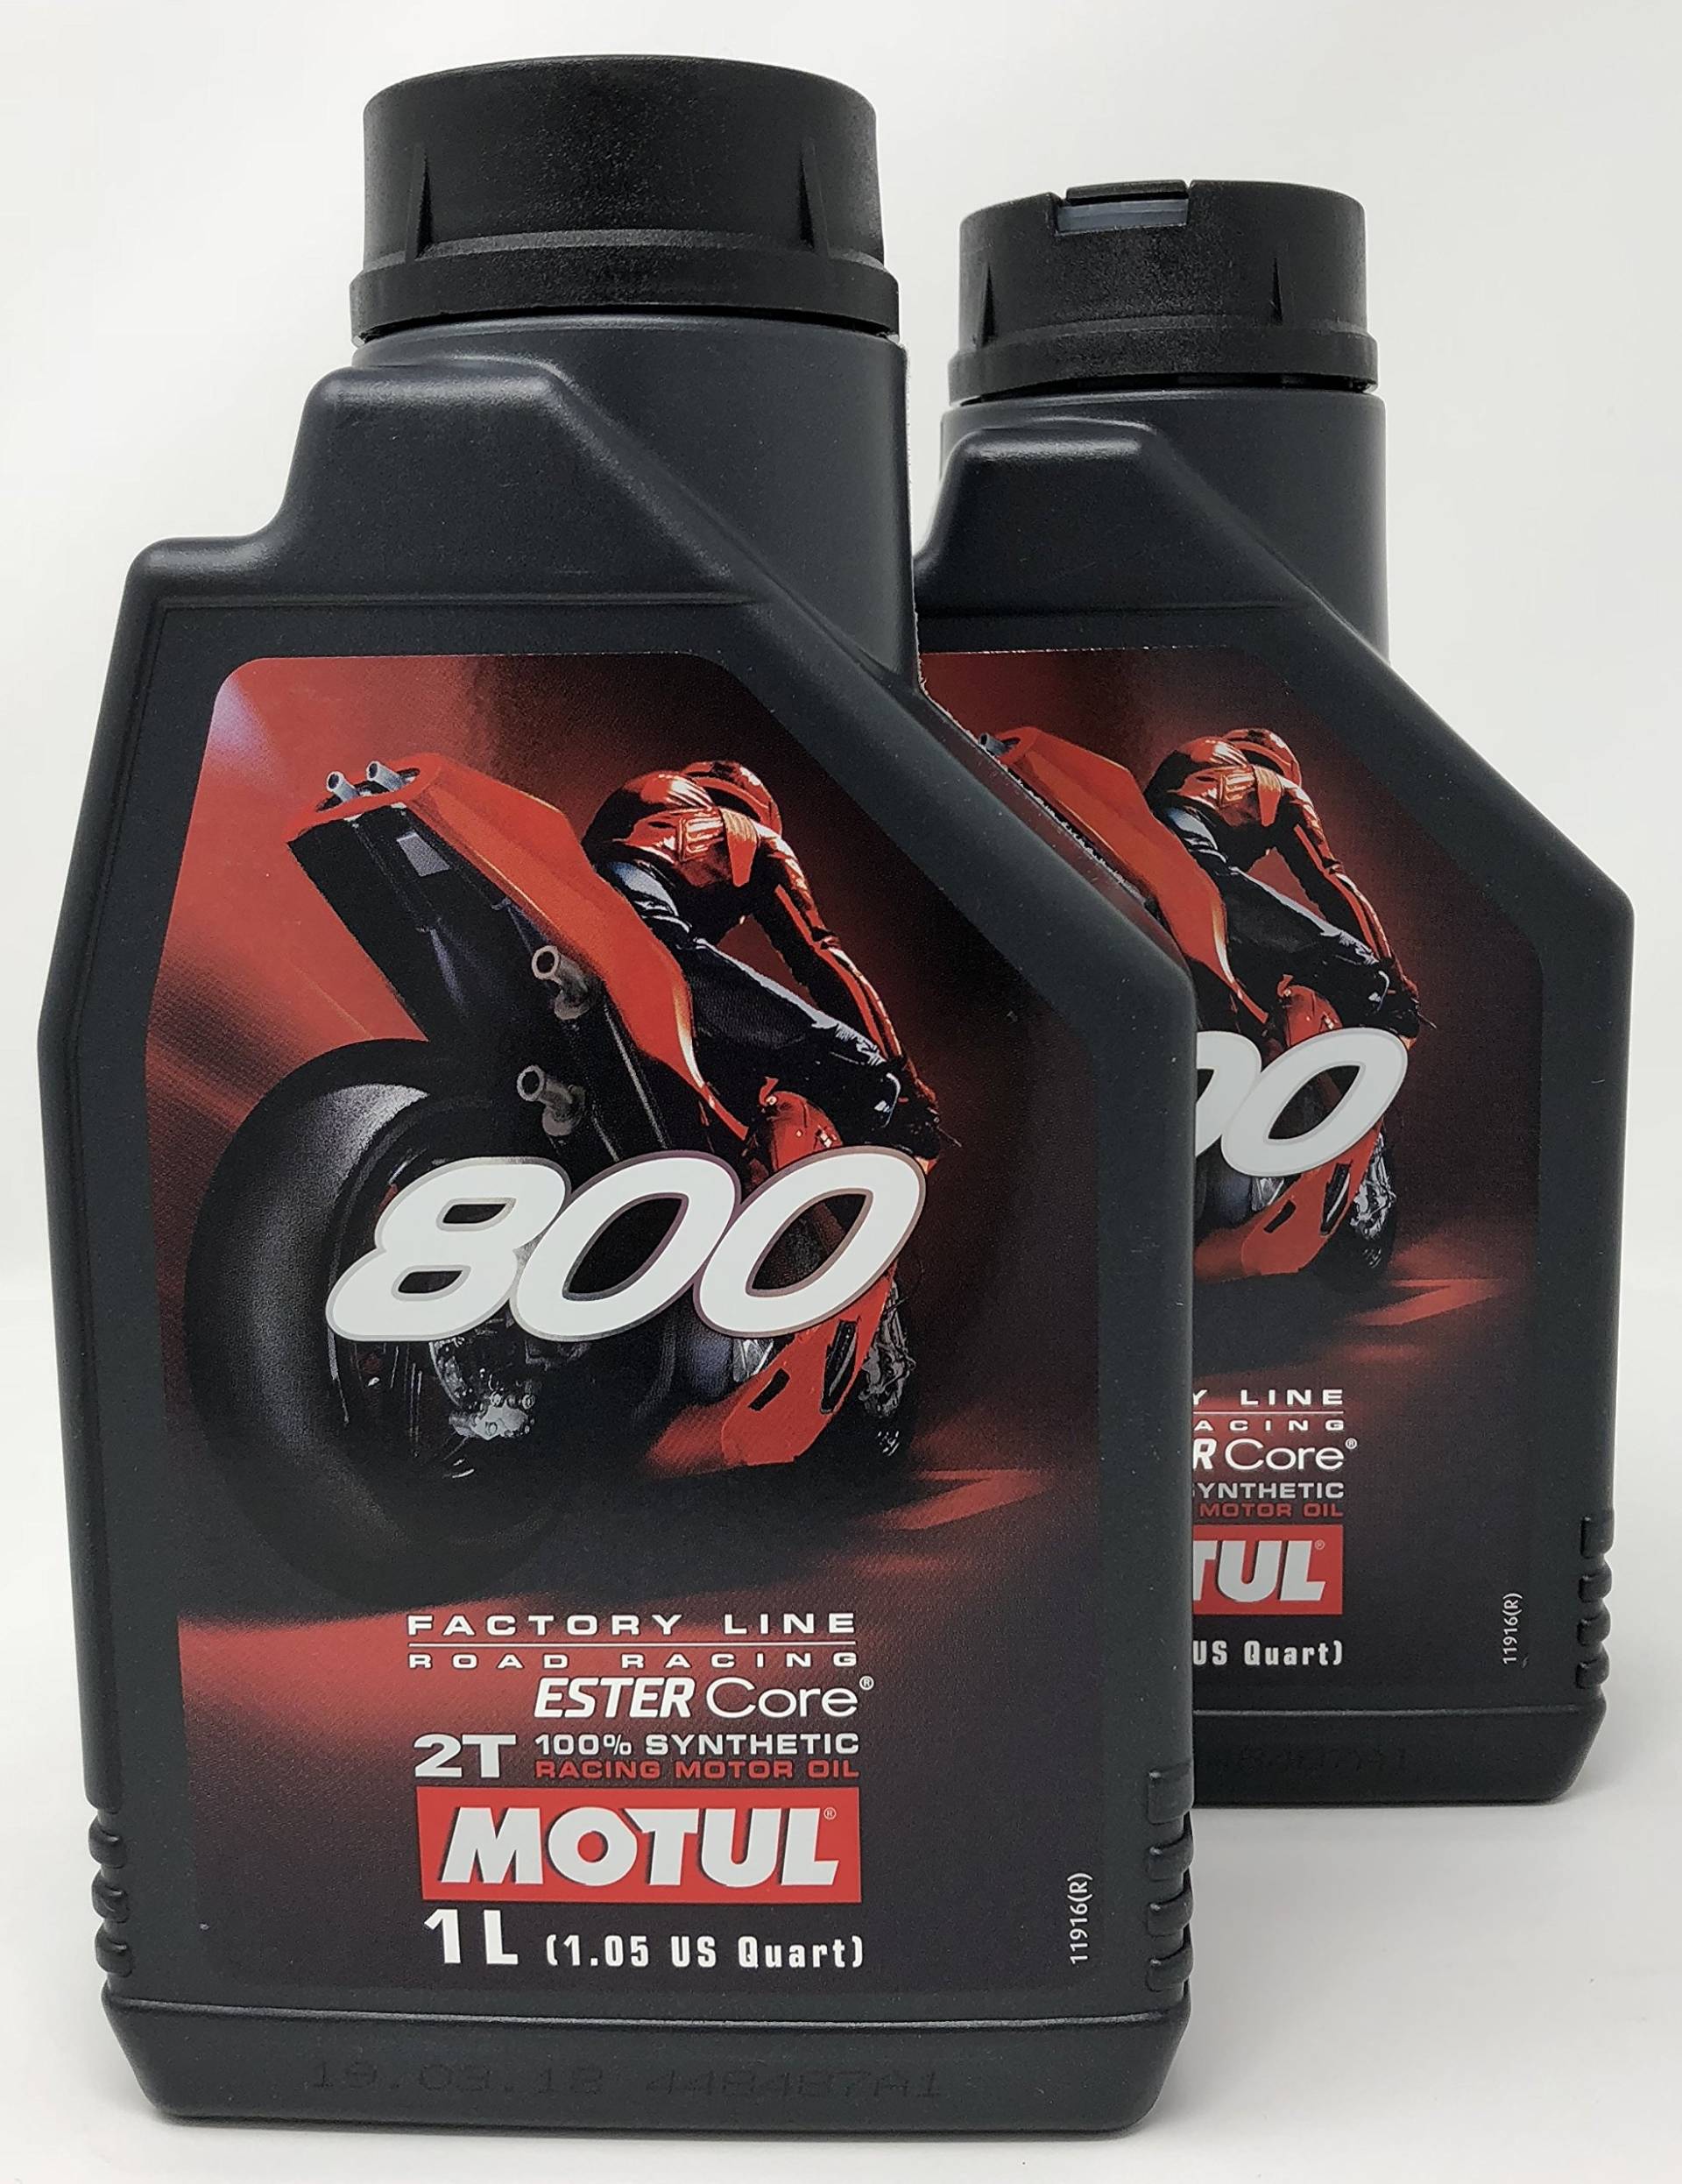 Motul Öl Moto 2T – 104041 800 2T Factory Line Road Racing, 2 Liter (2 x 1 Lt) von Motul